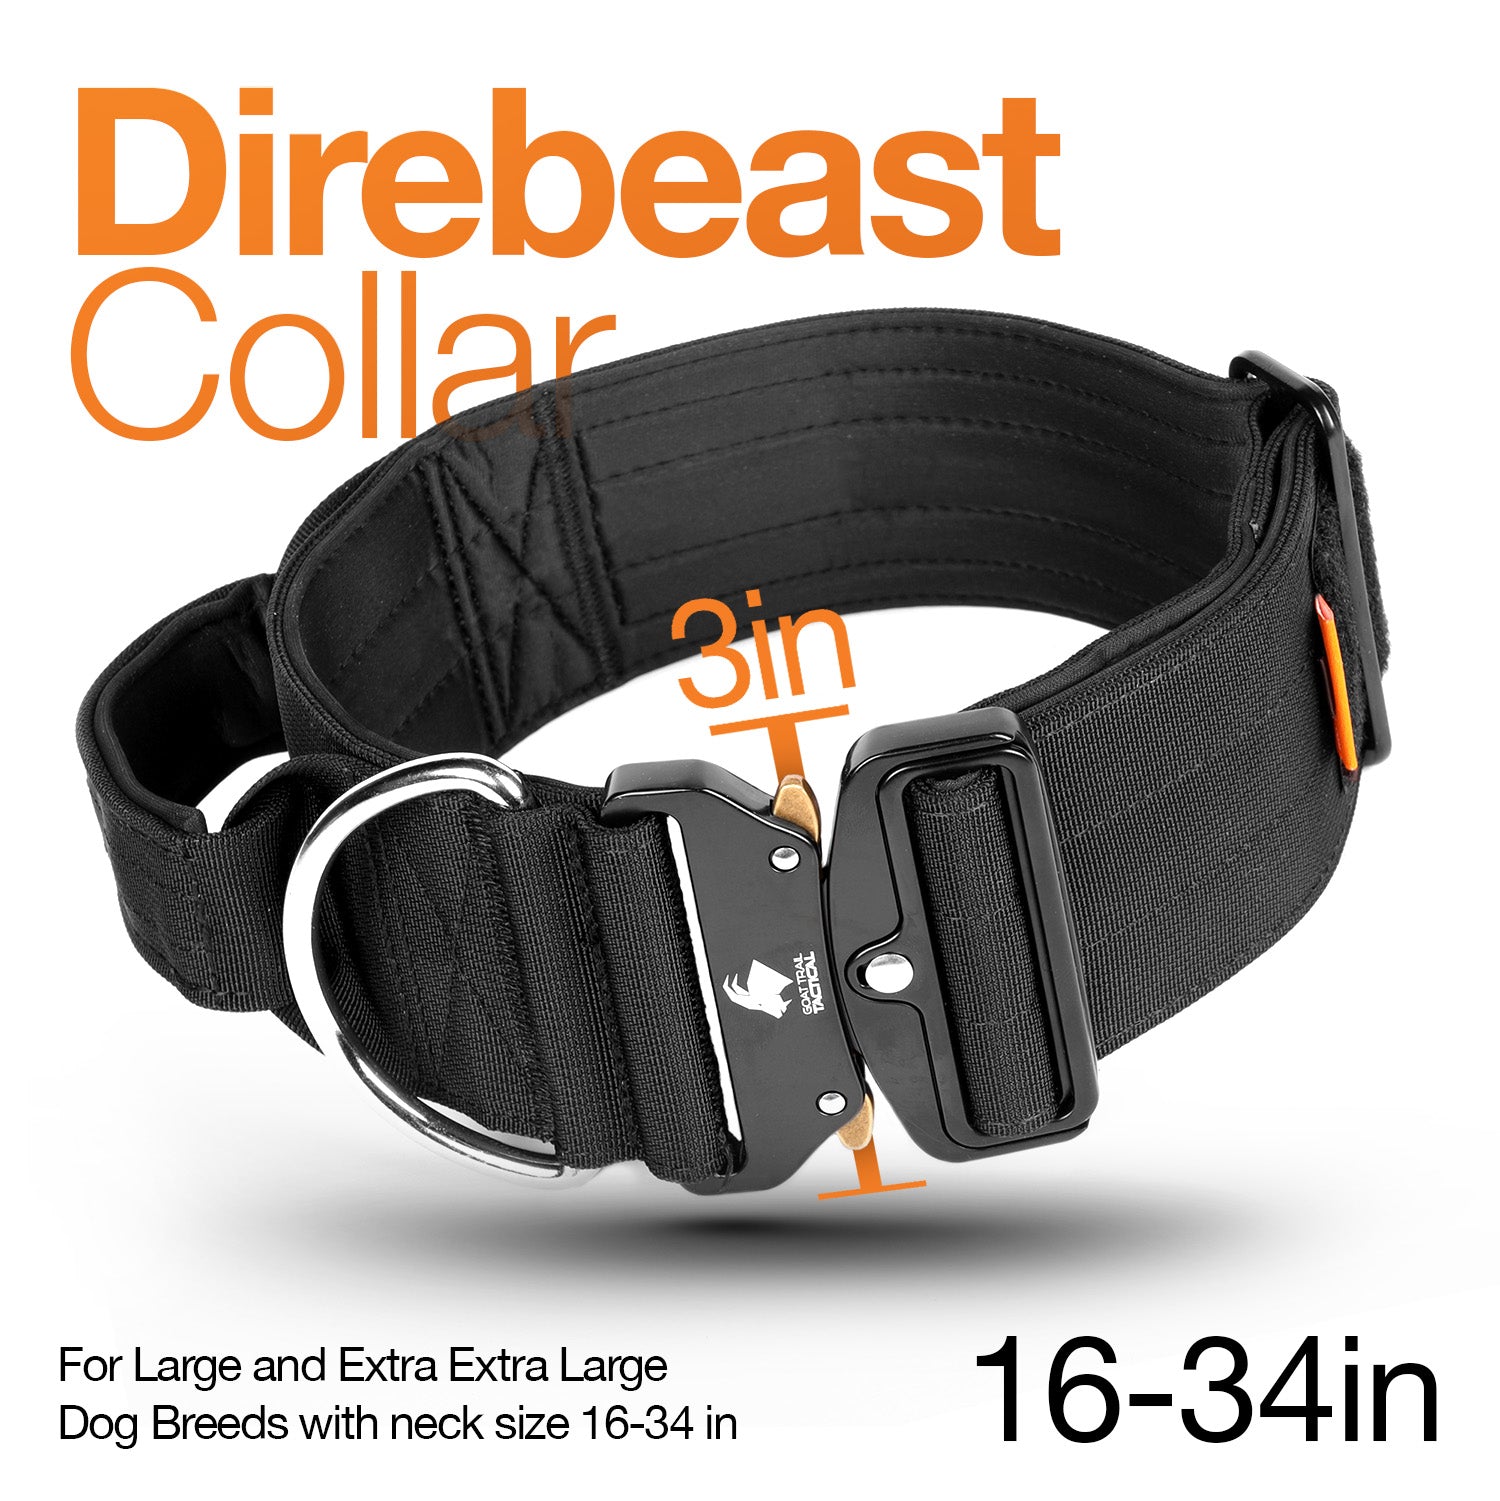 3 inch GTT Direbeast Tactical dog collar | Large- XX-Large Breeds